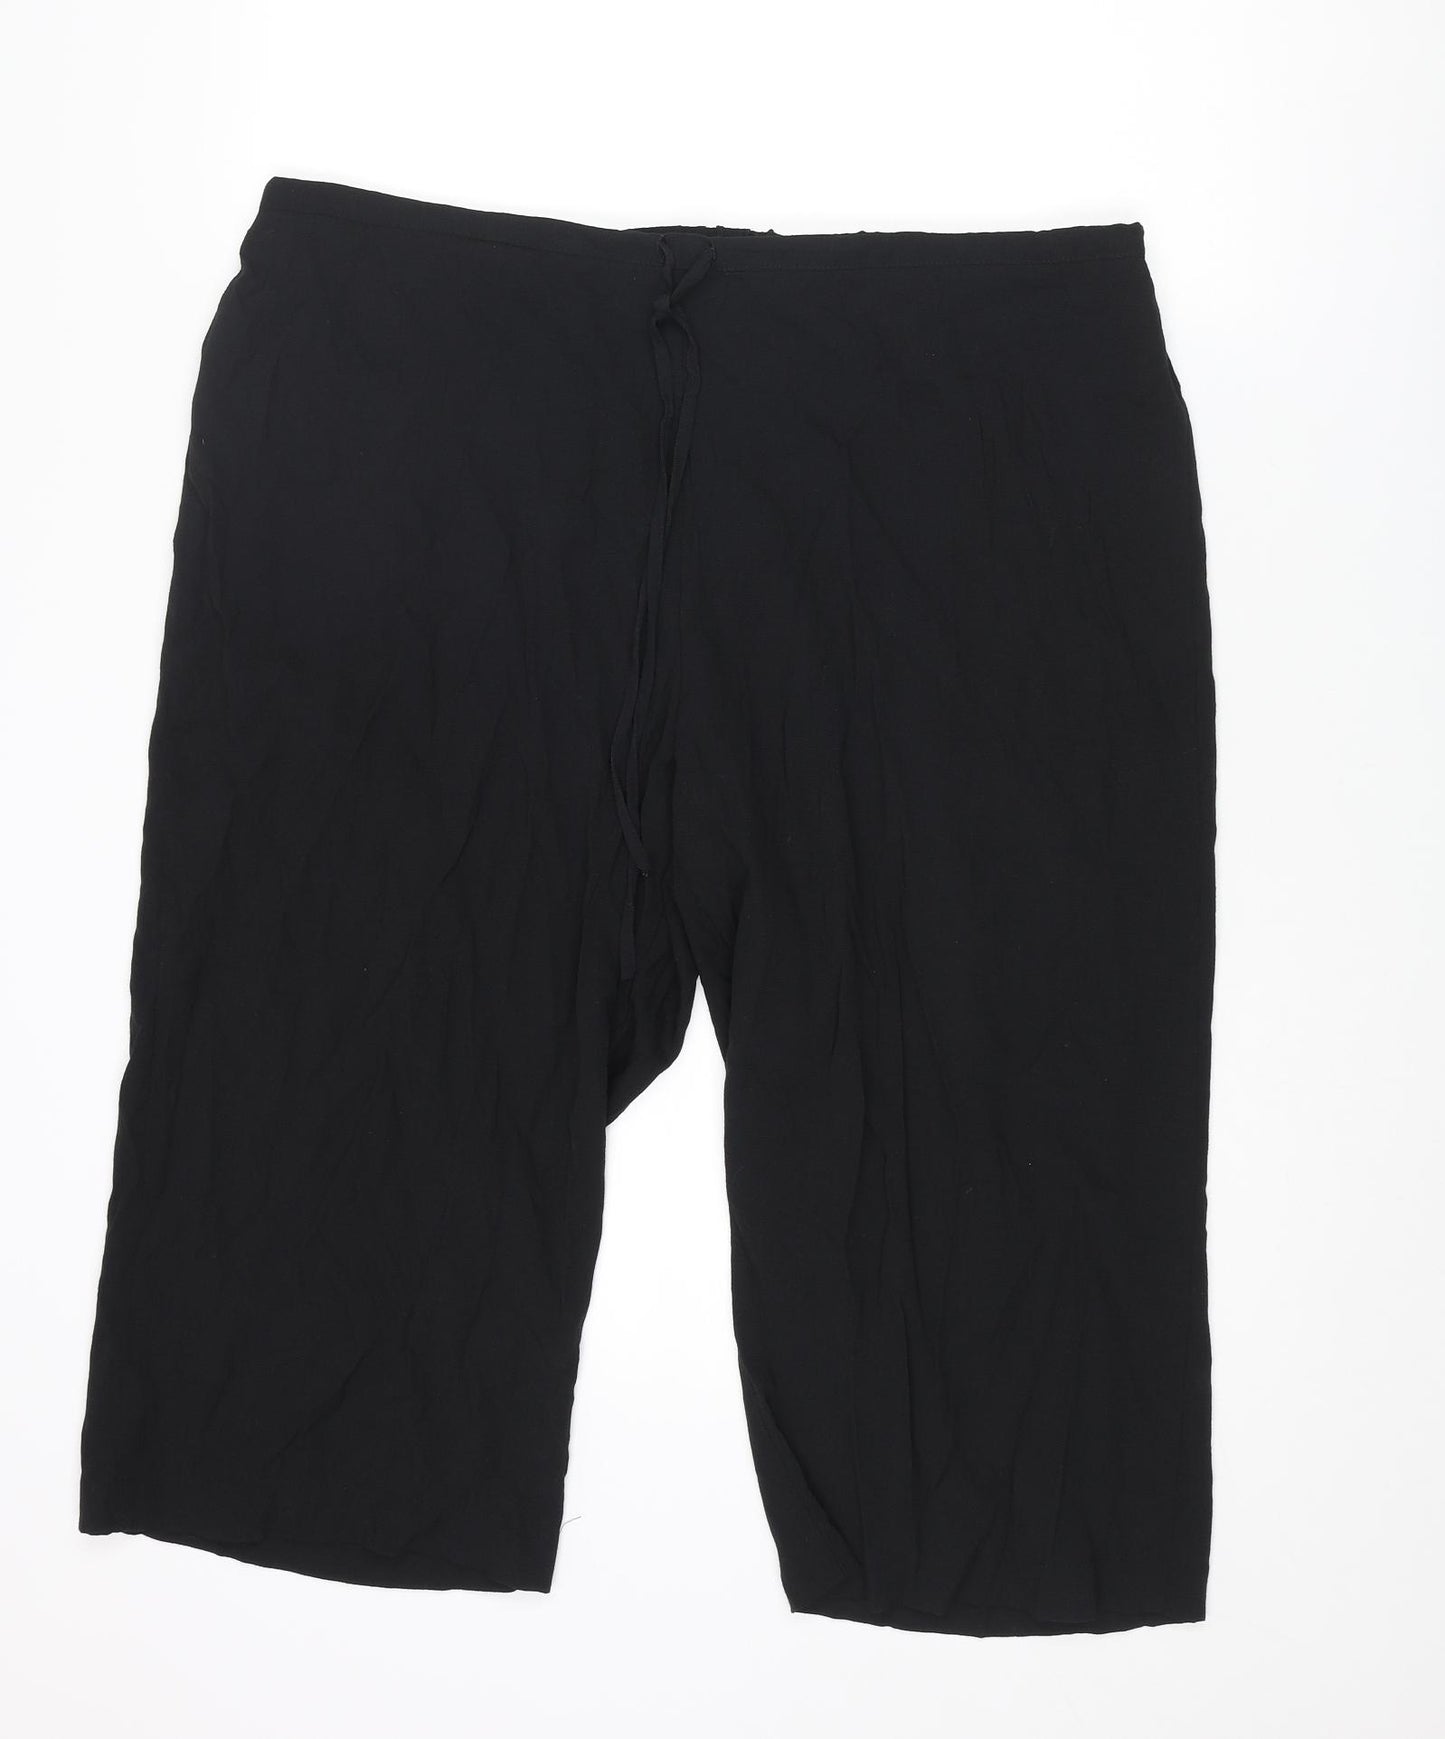 Bonmarché Womens Black Viscose Capri Trousers Size 20 L20.5 in Regular Drawstring